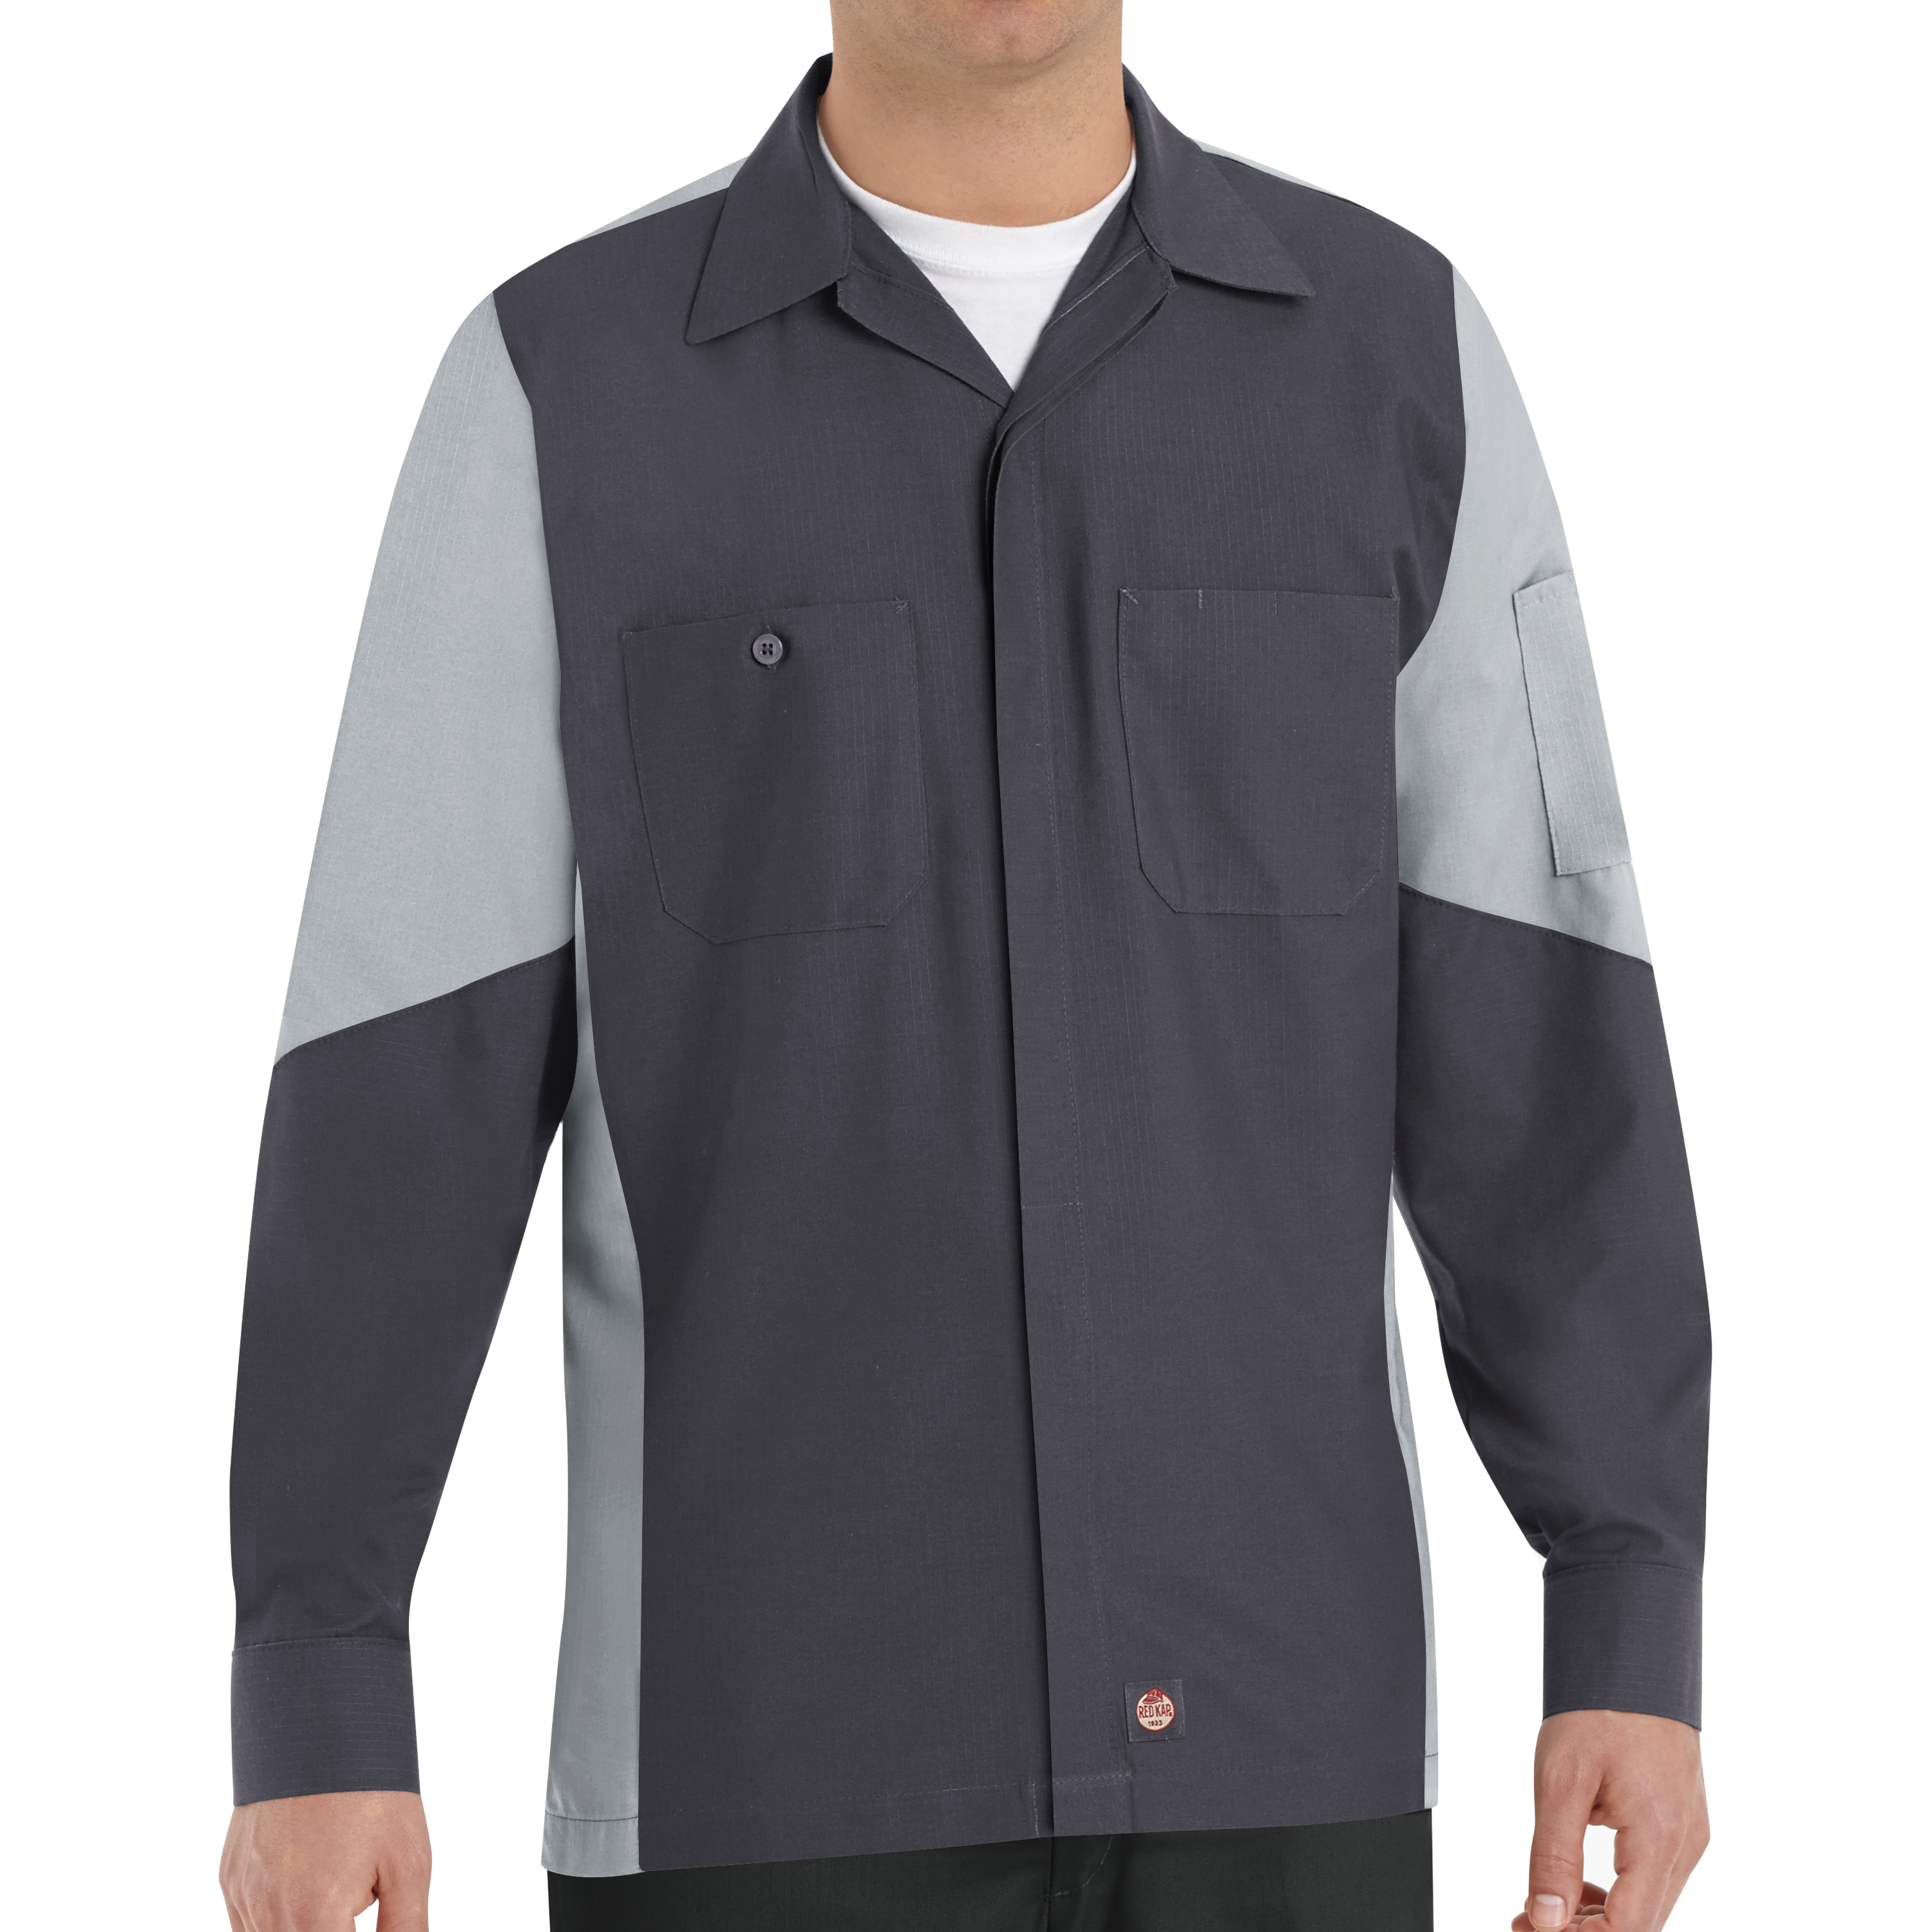 Red Kap mens Long Sleeve Two-Tone Crew Shirt Charcoal/Grey Large 